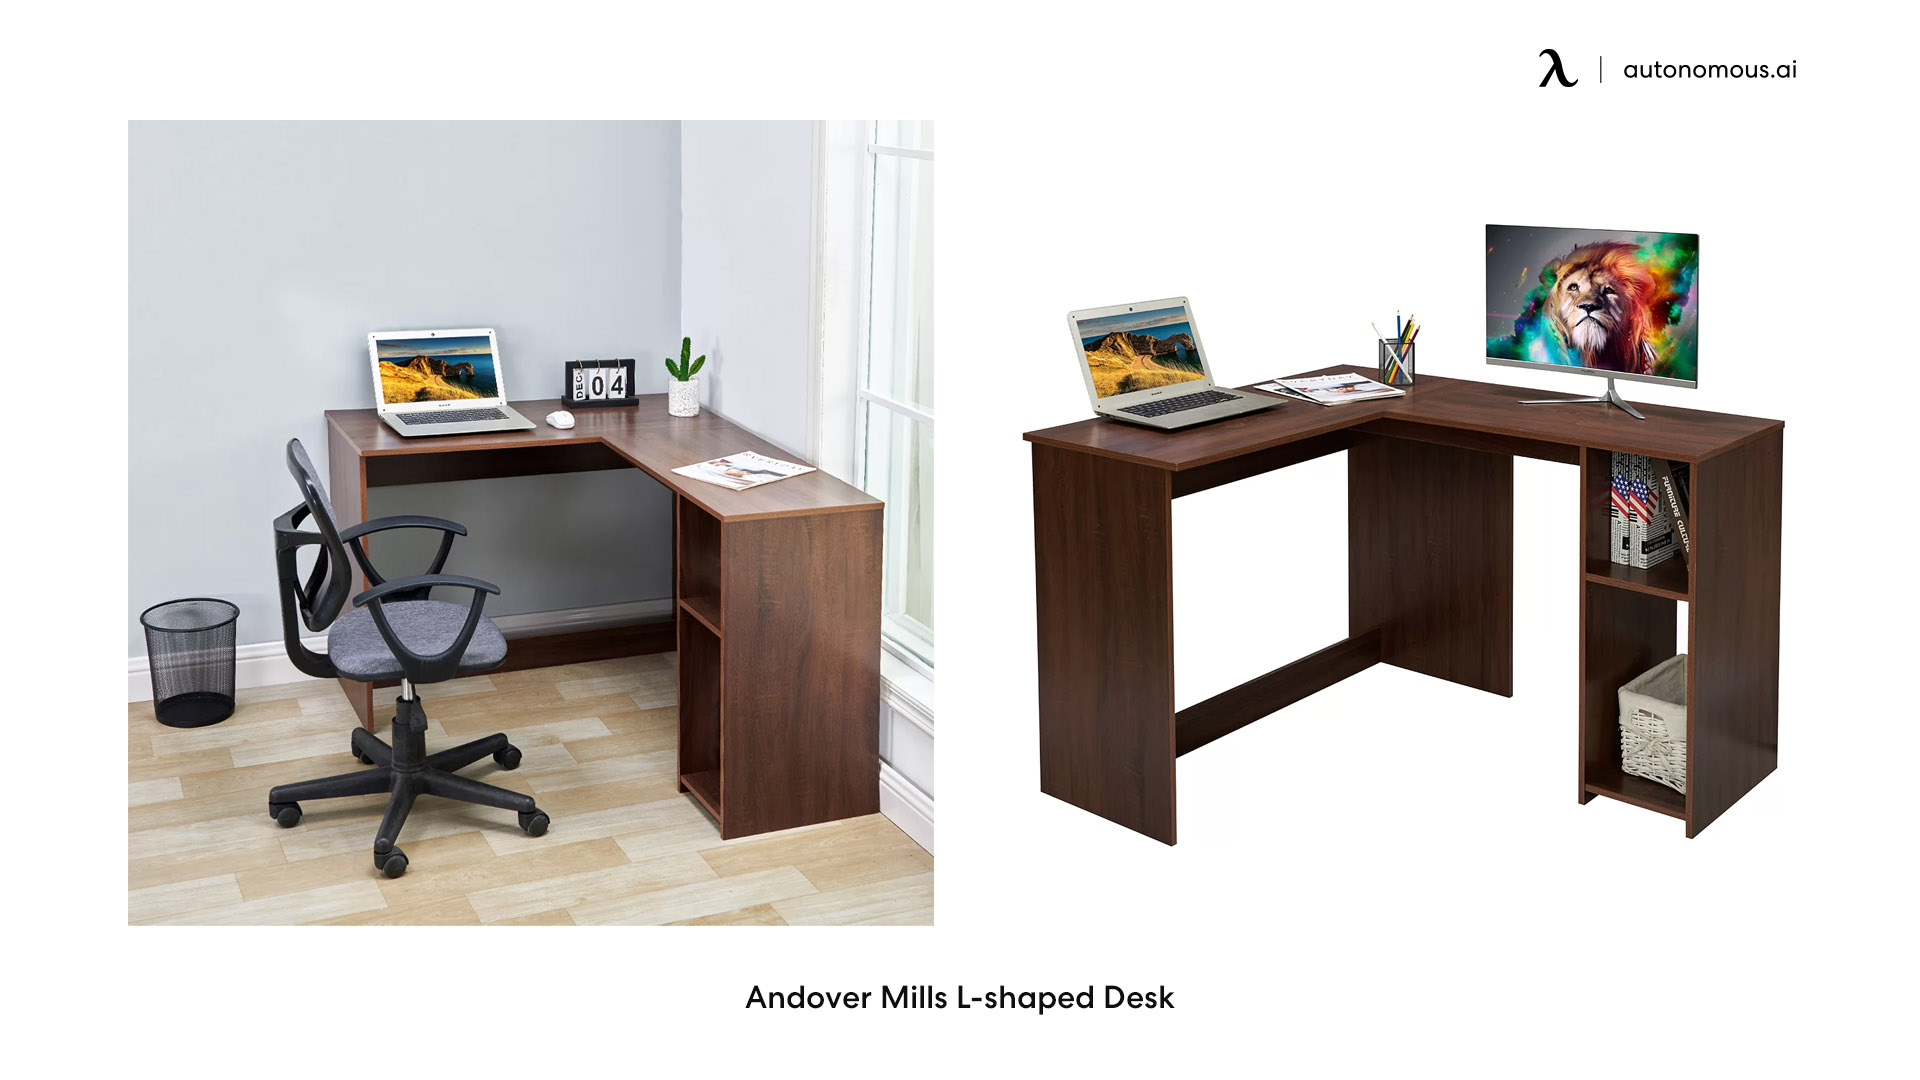 Andover Mills L-shaped Desk